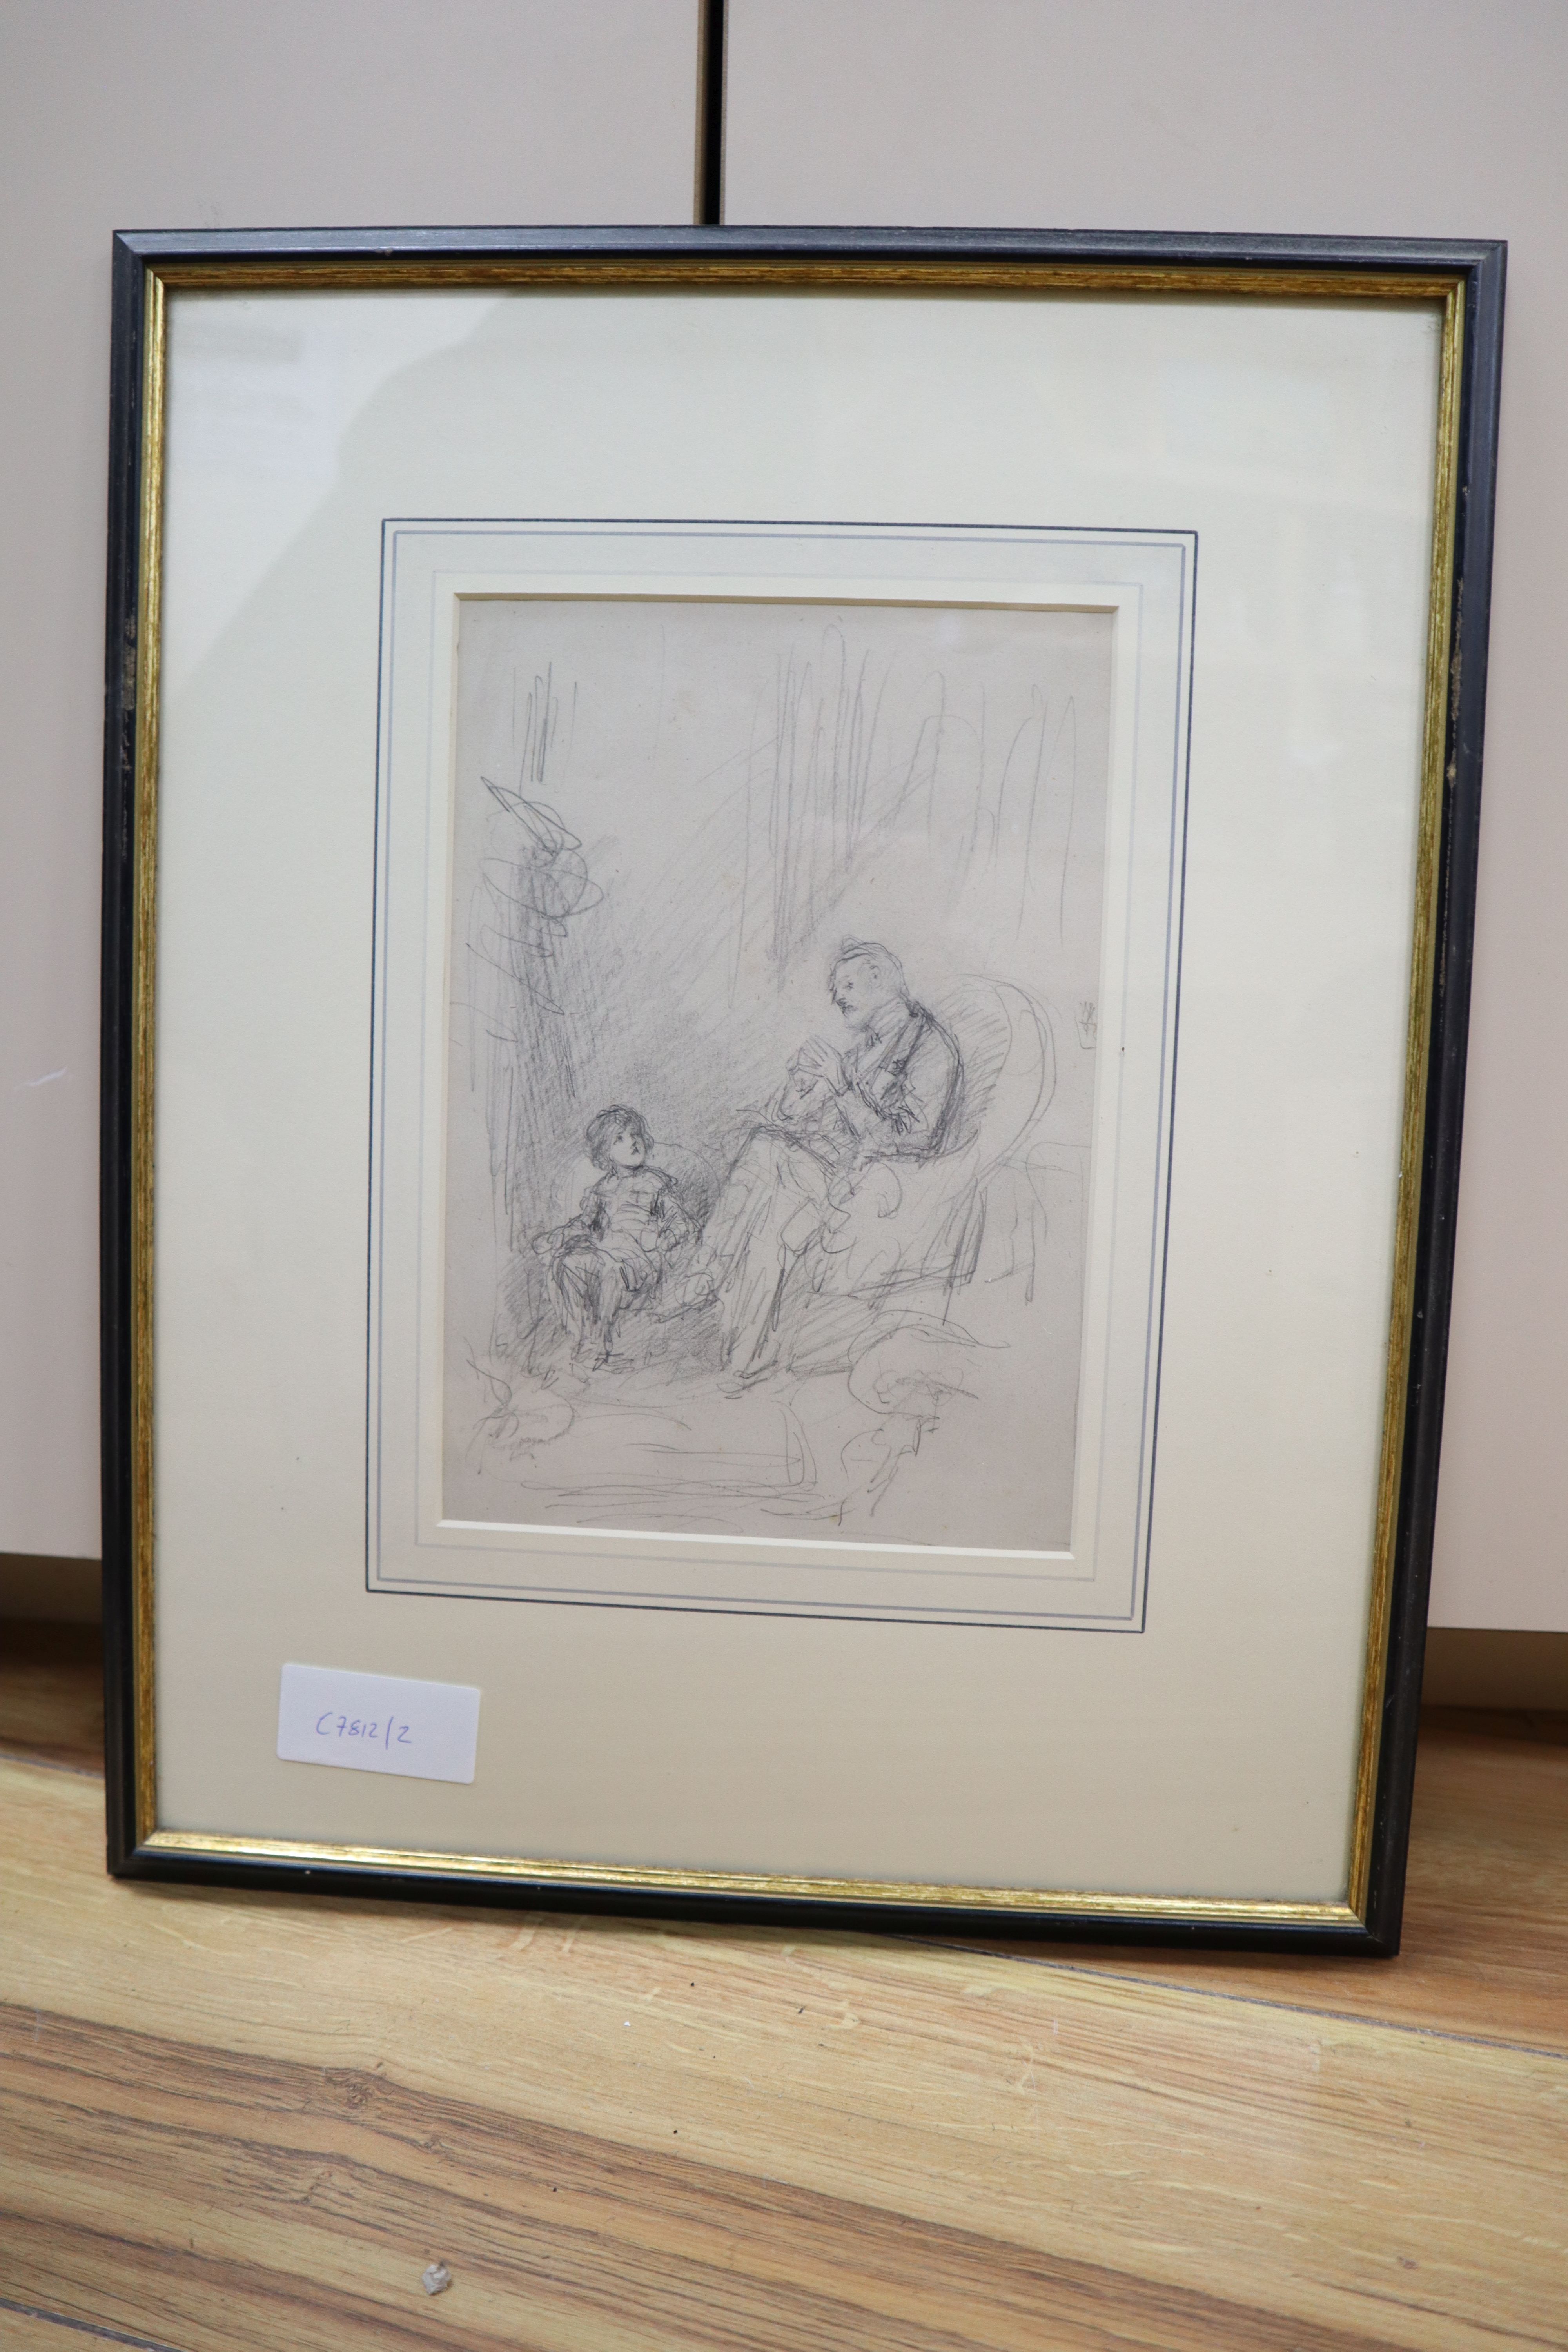 Joseph Clark (1834-1912), pencil drawing, Figures beside the hearth, 22 x 15cm